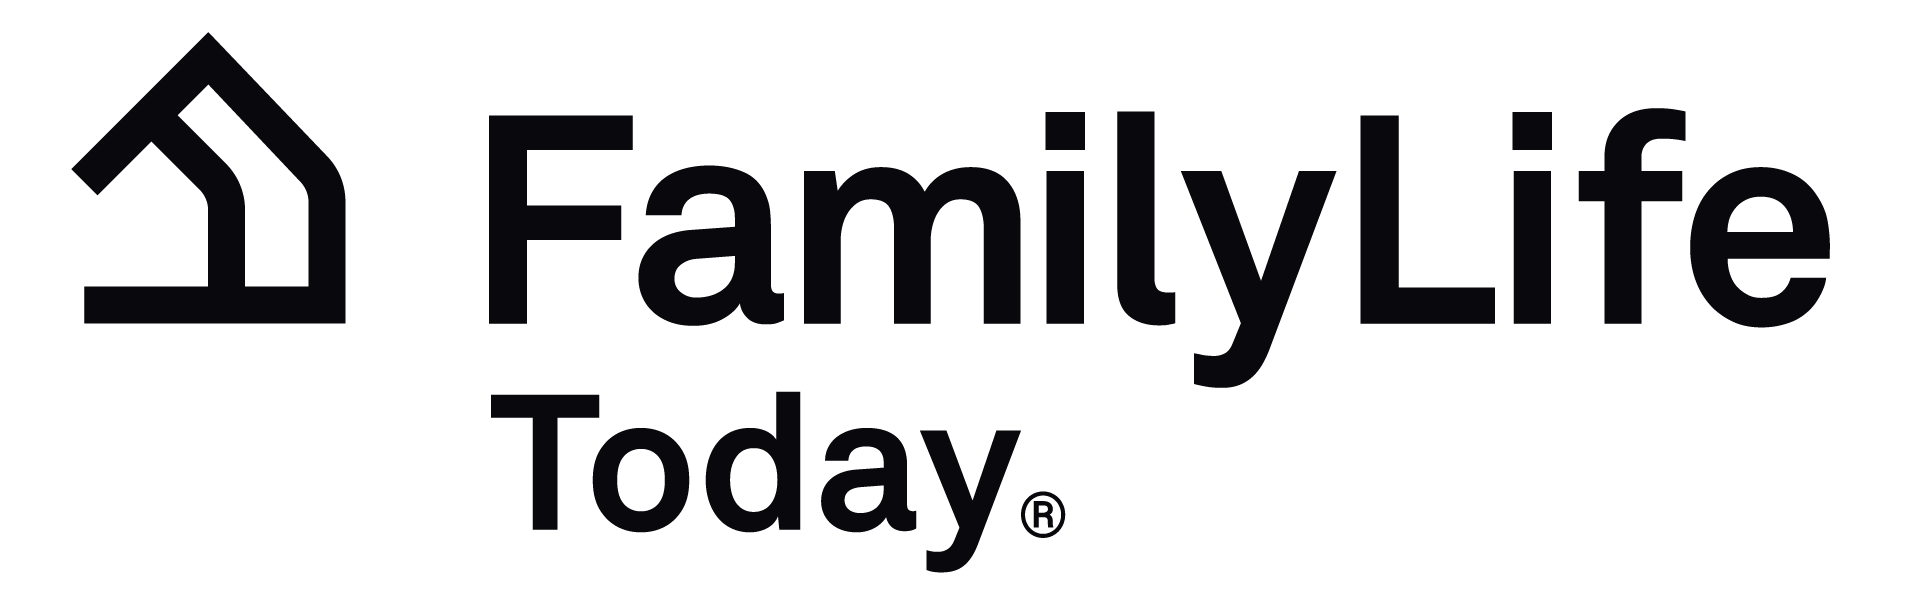 FamilyLifeToday_SoftBlack.png